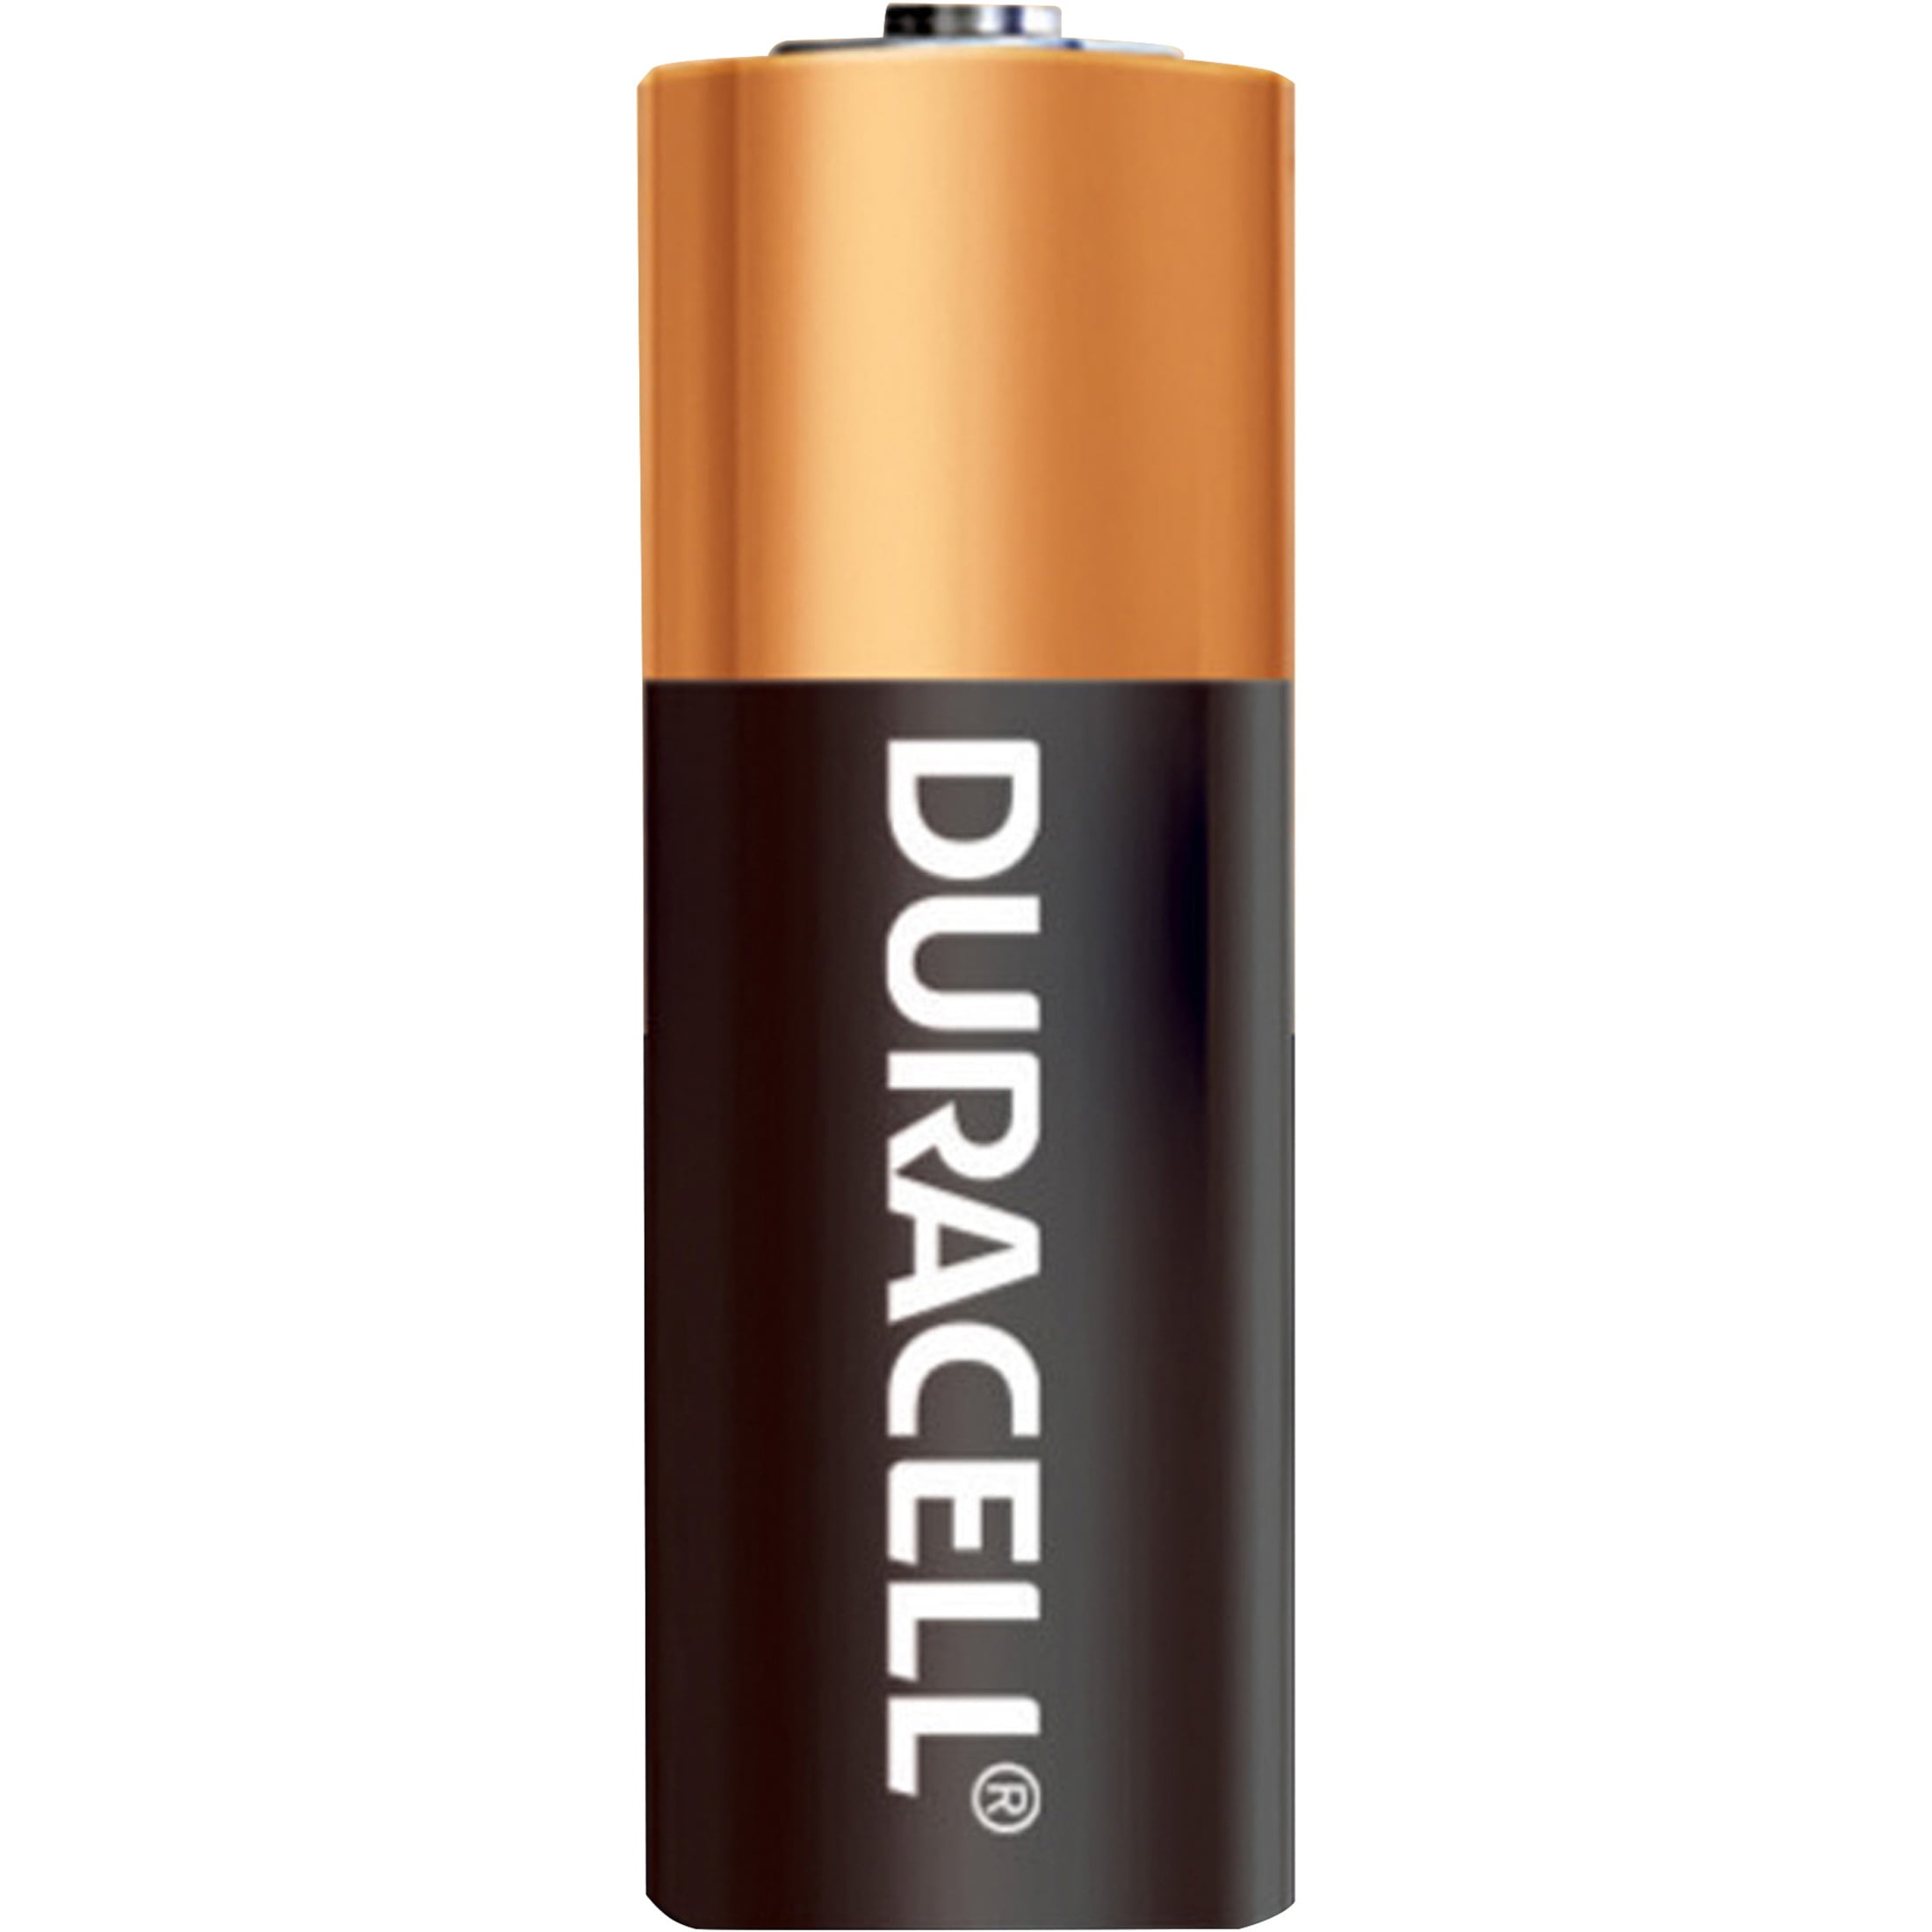 Duracell MN21, GP23AE, V23GA 12v Alkaliskt batteri 2pk